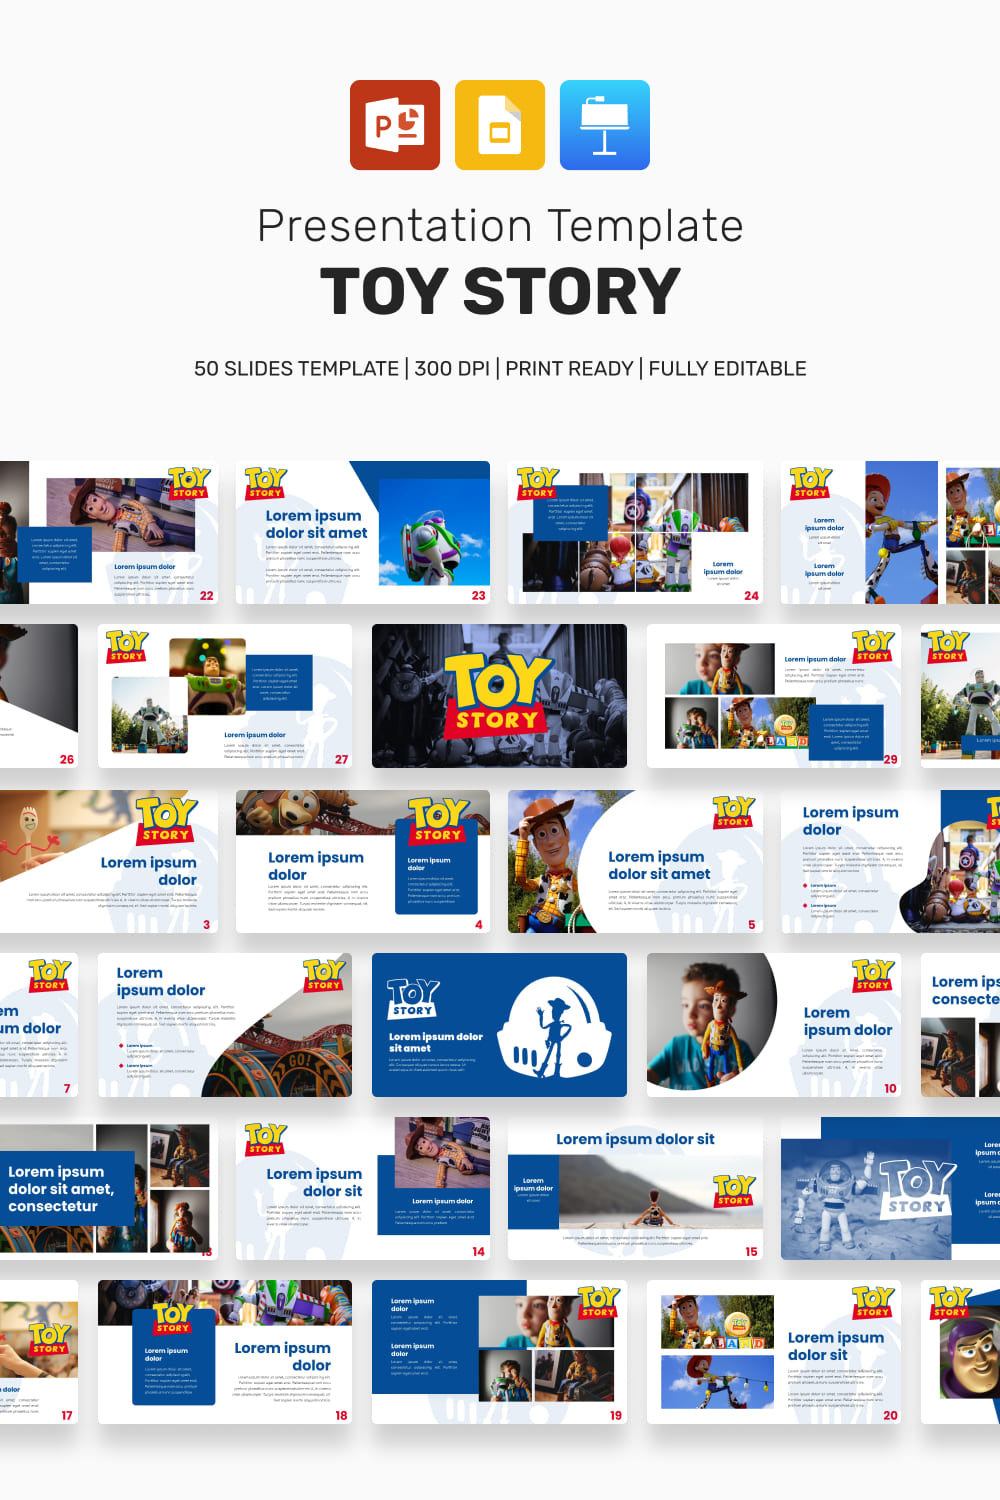 Toy story Disney presentation in three formats.